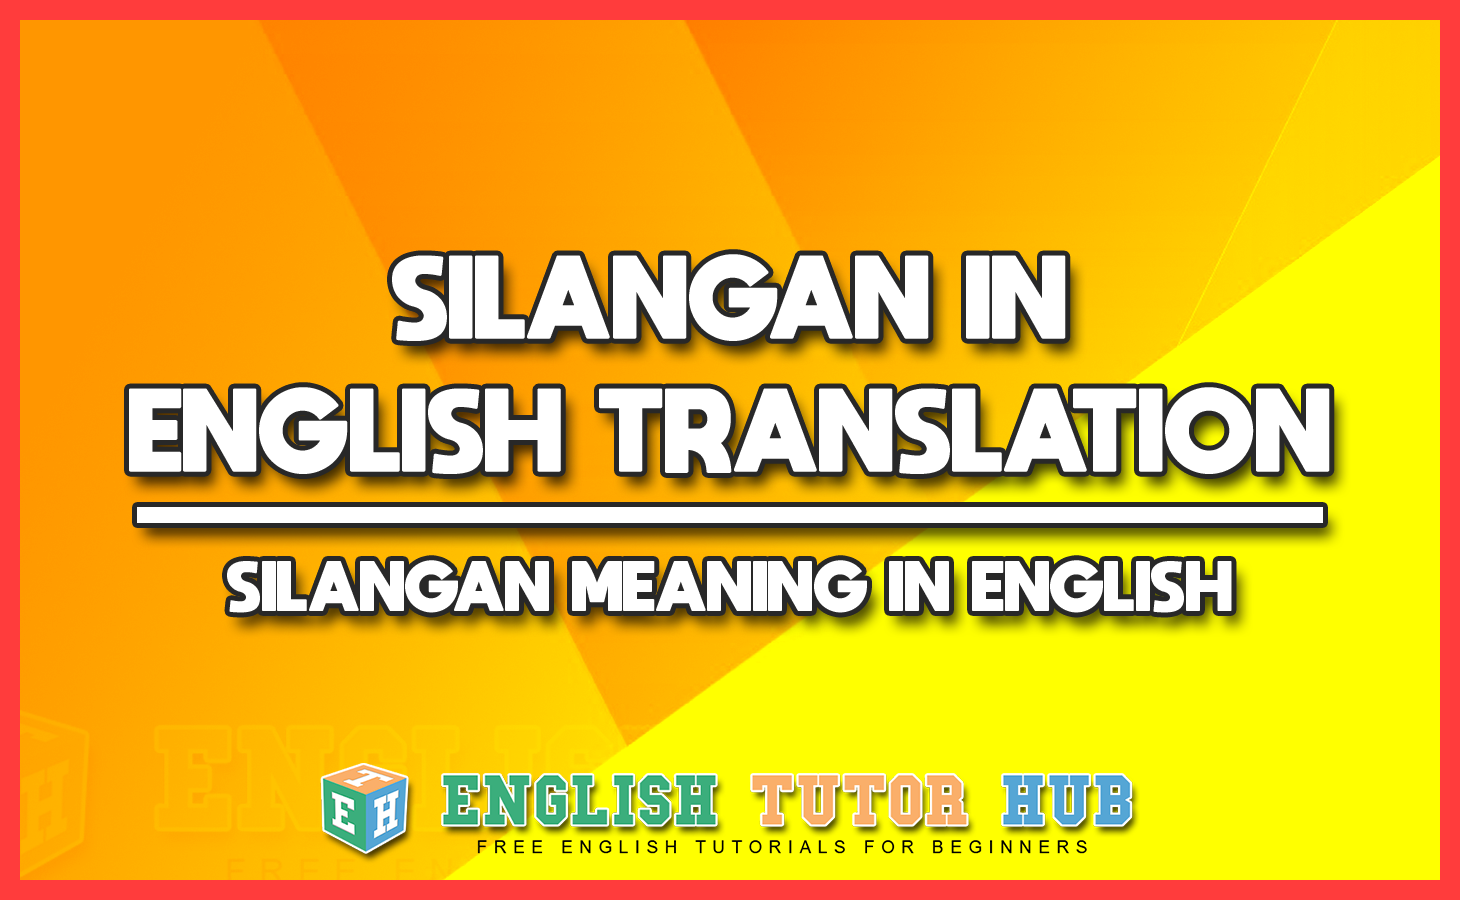 SILANGAN IN ENGLISH TRANSLATION - SILANGAN MEANING IN ENGLISH